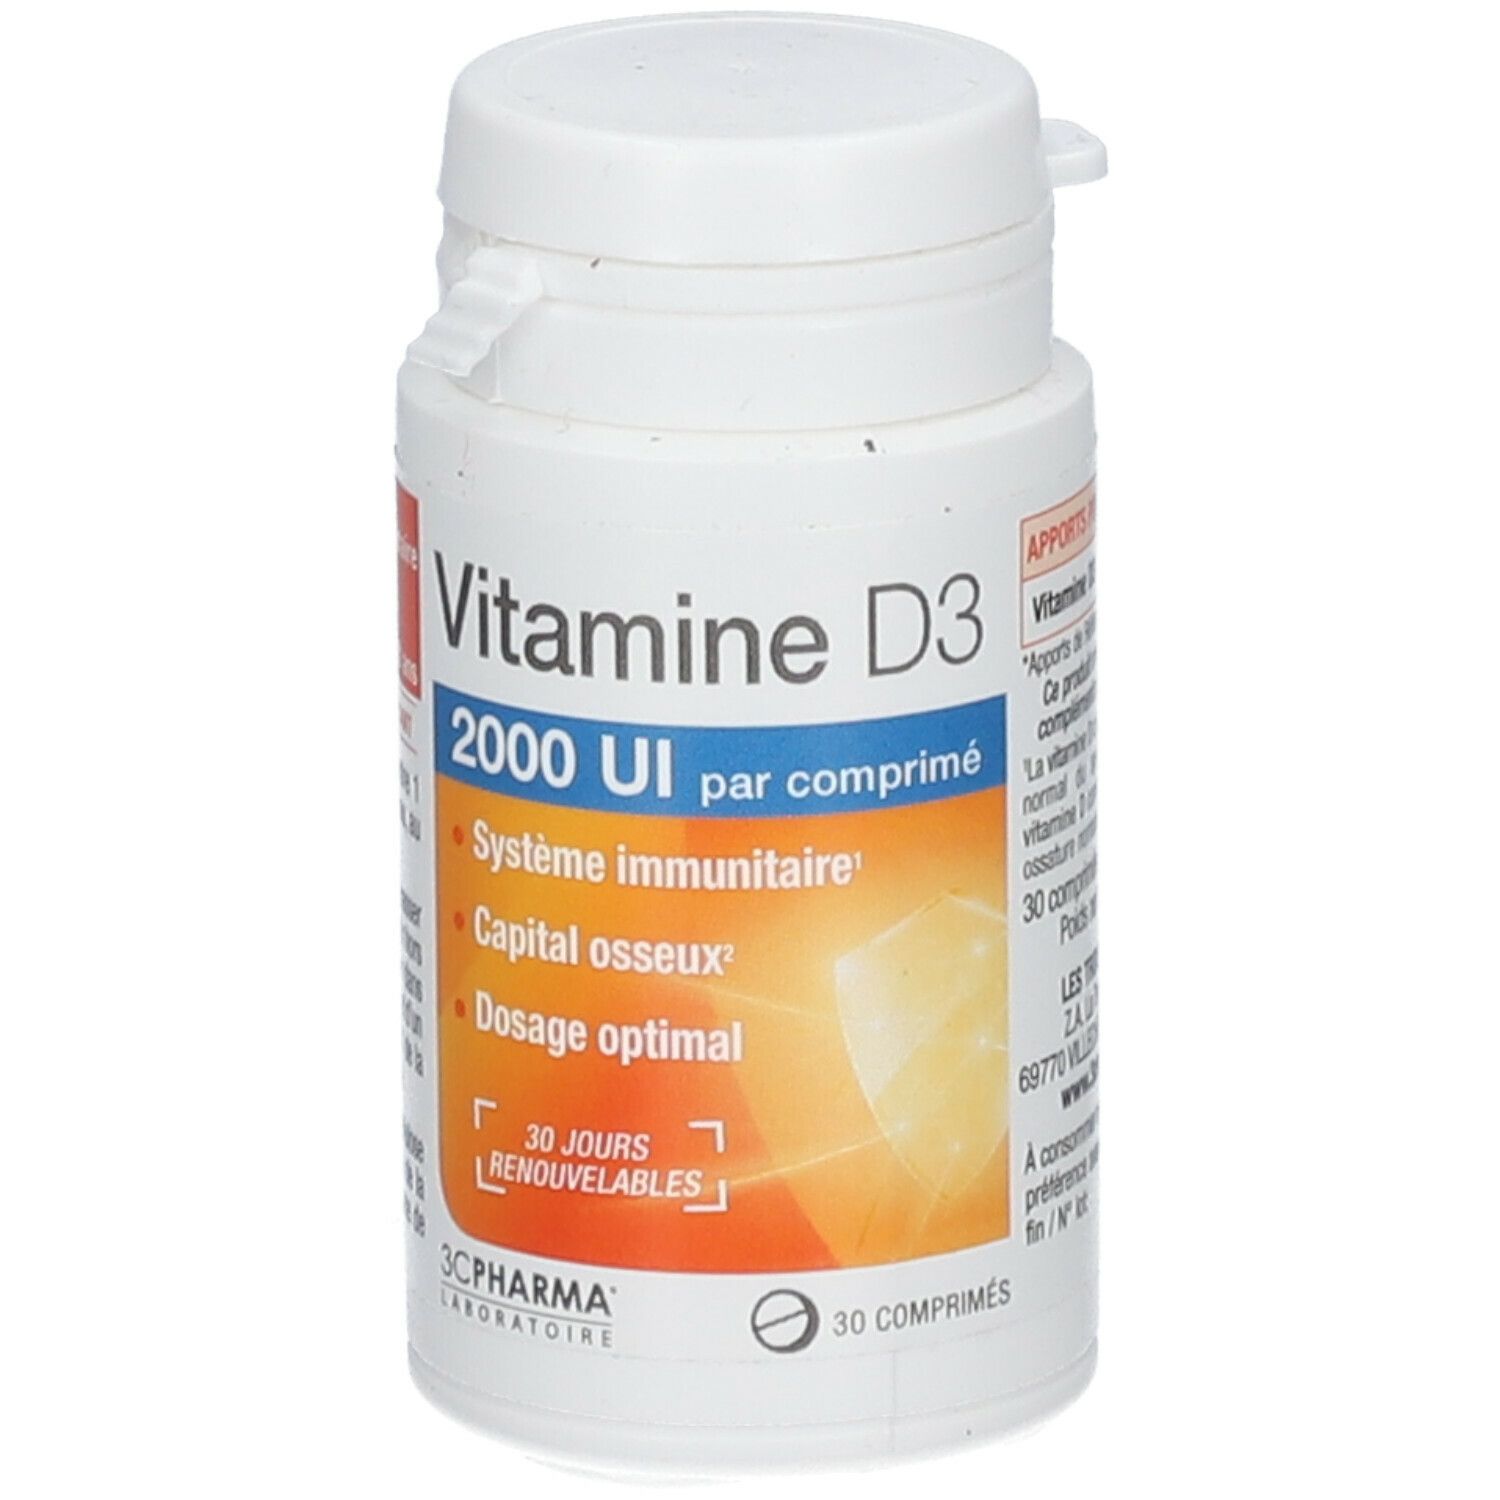 3C Pharma® Vitamine D3